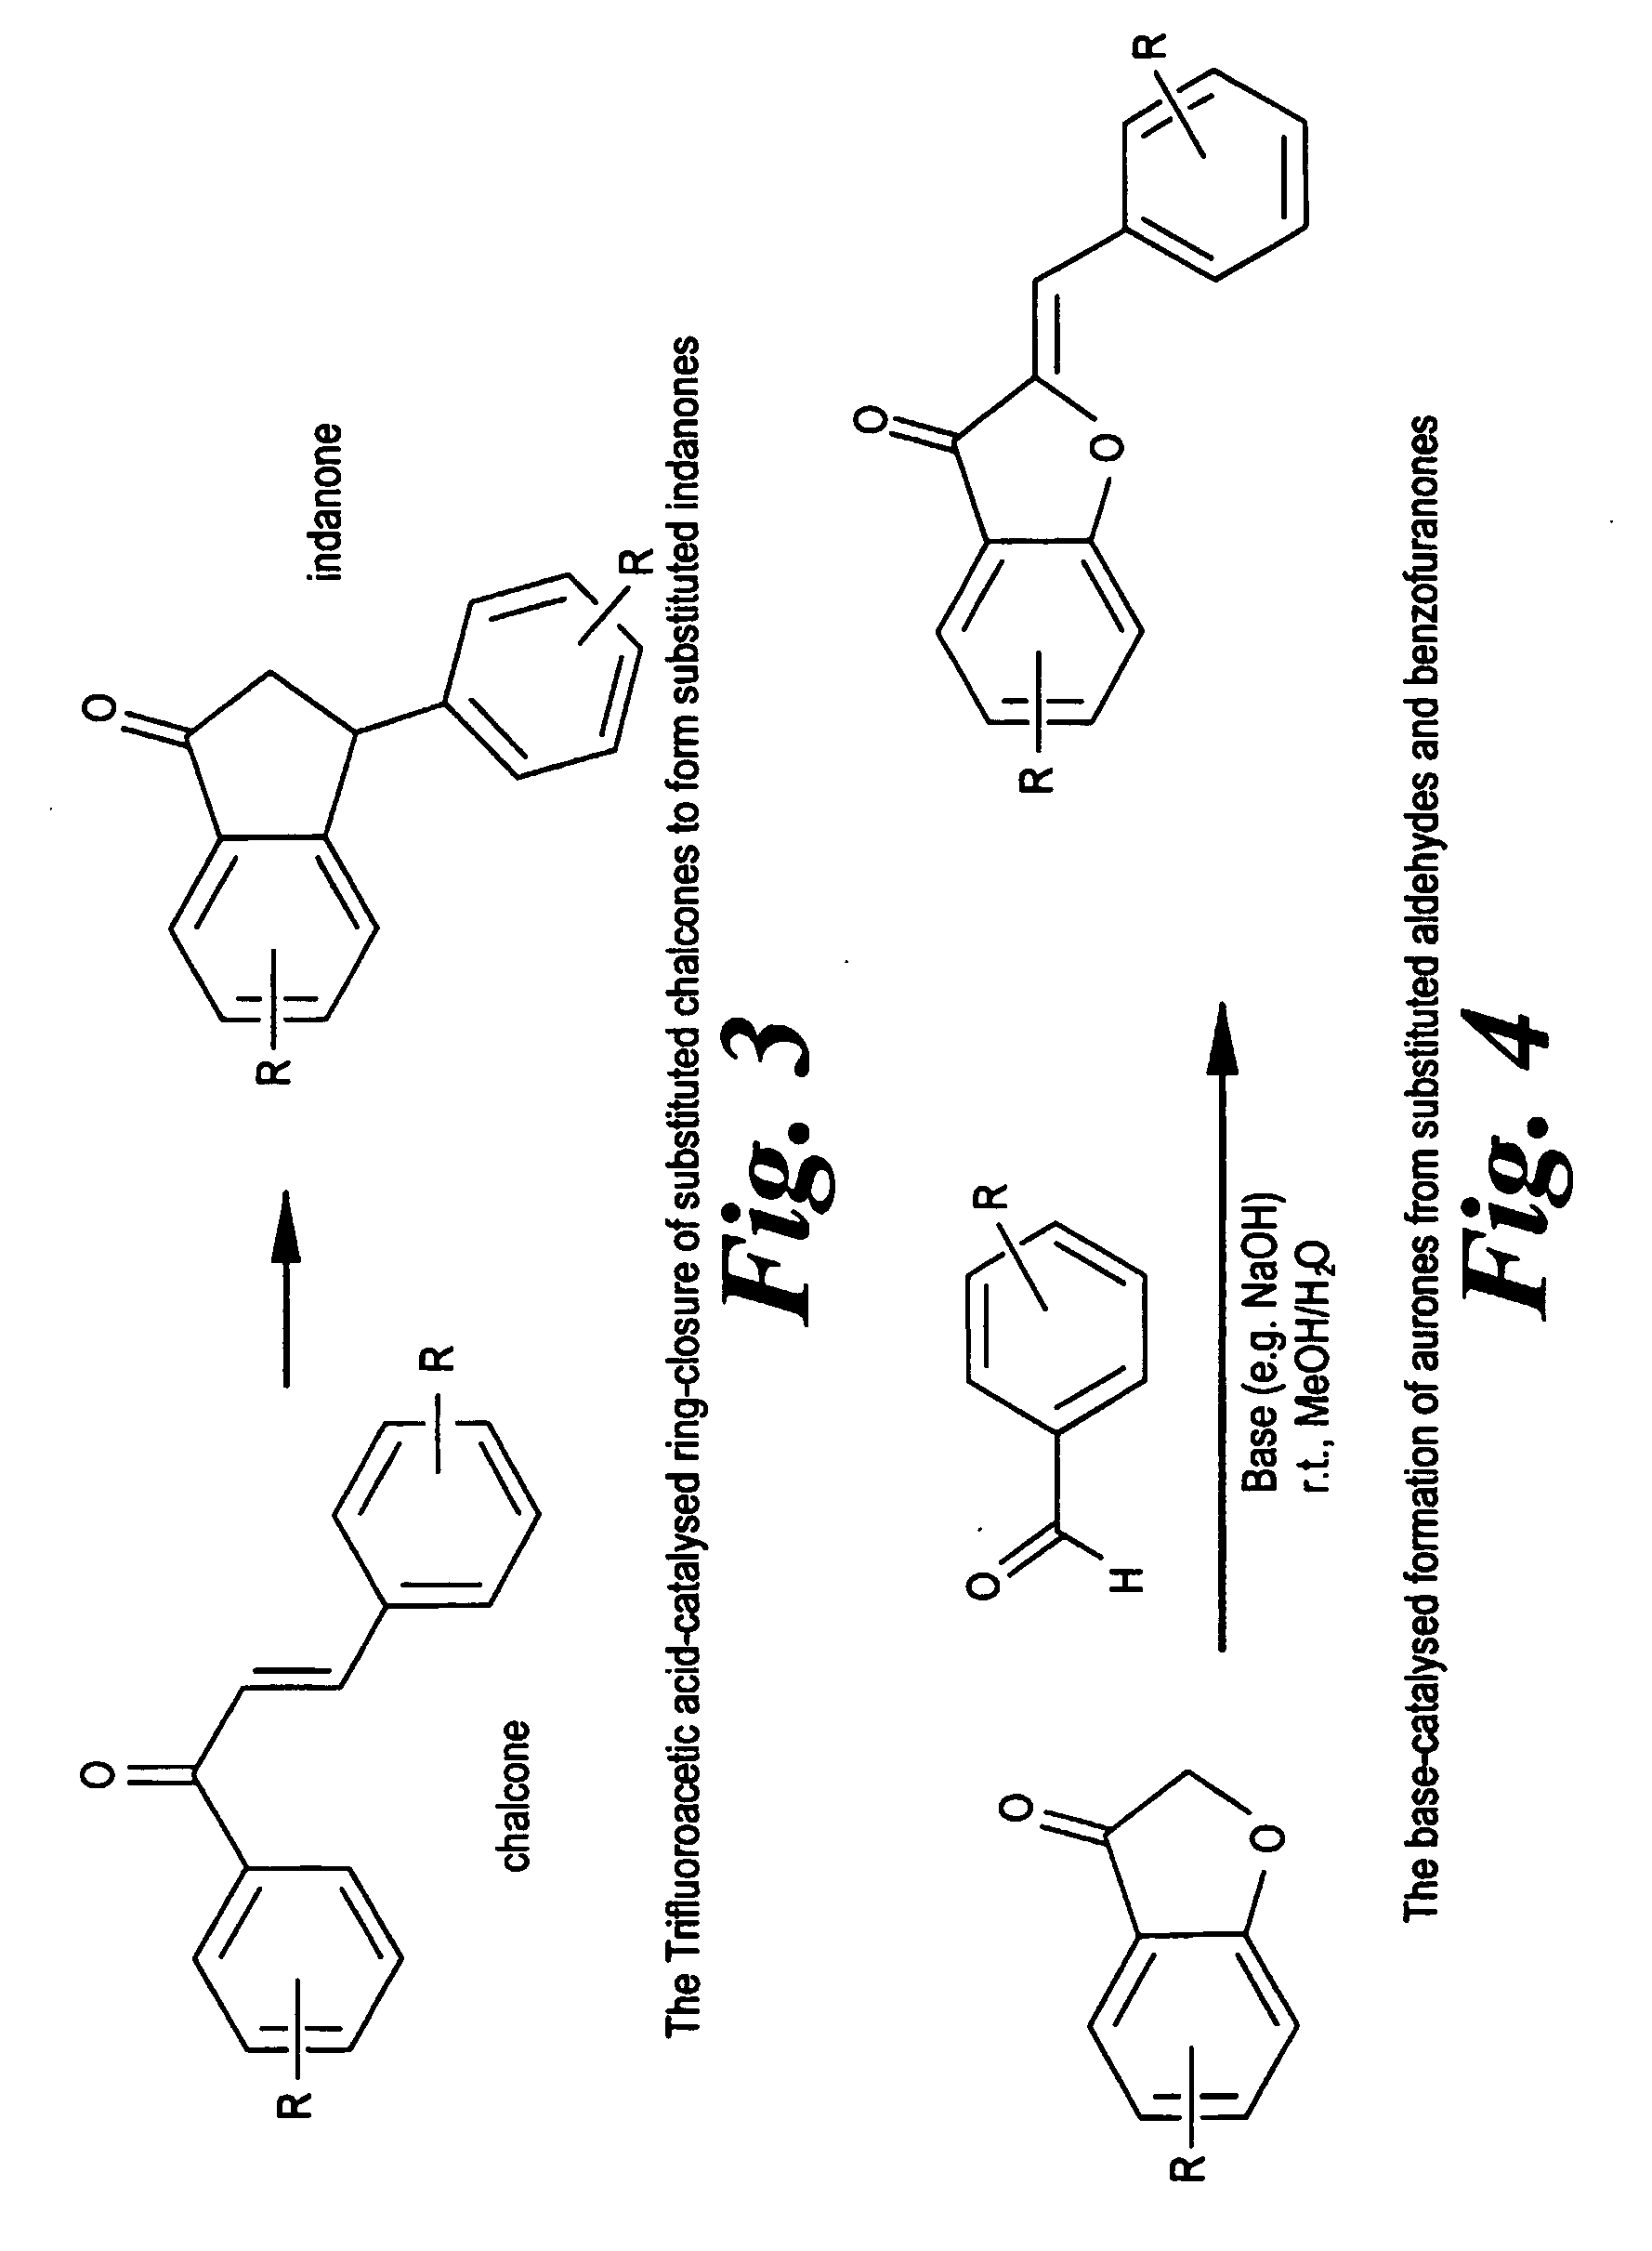 Combretastatin a-4 derivatives having antineoplastic activity